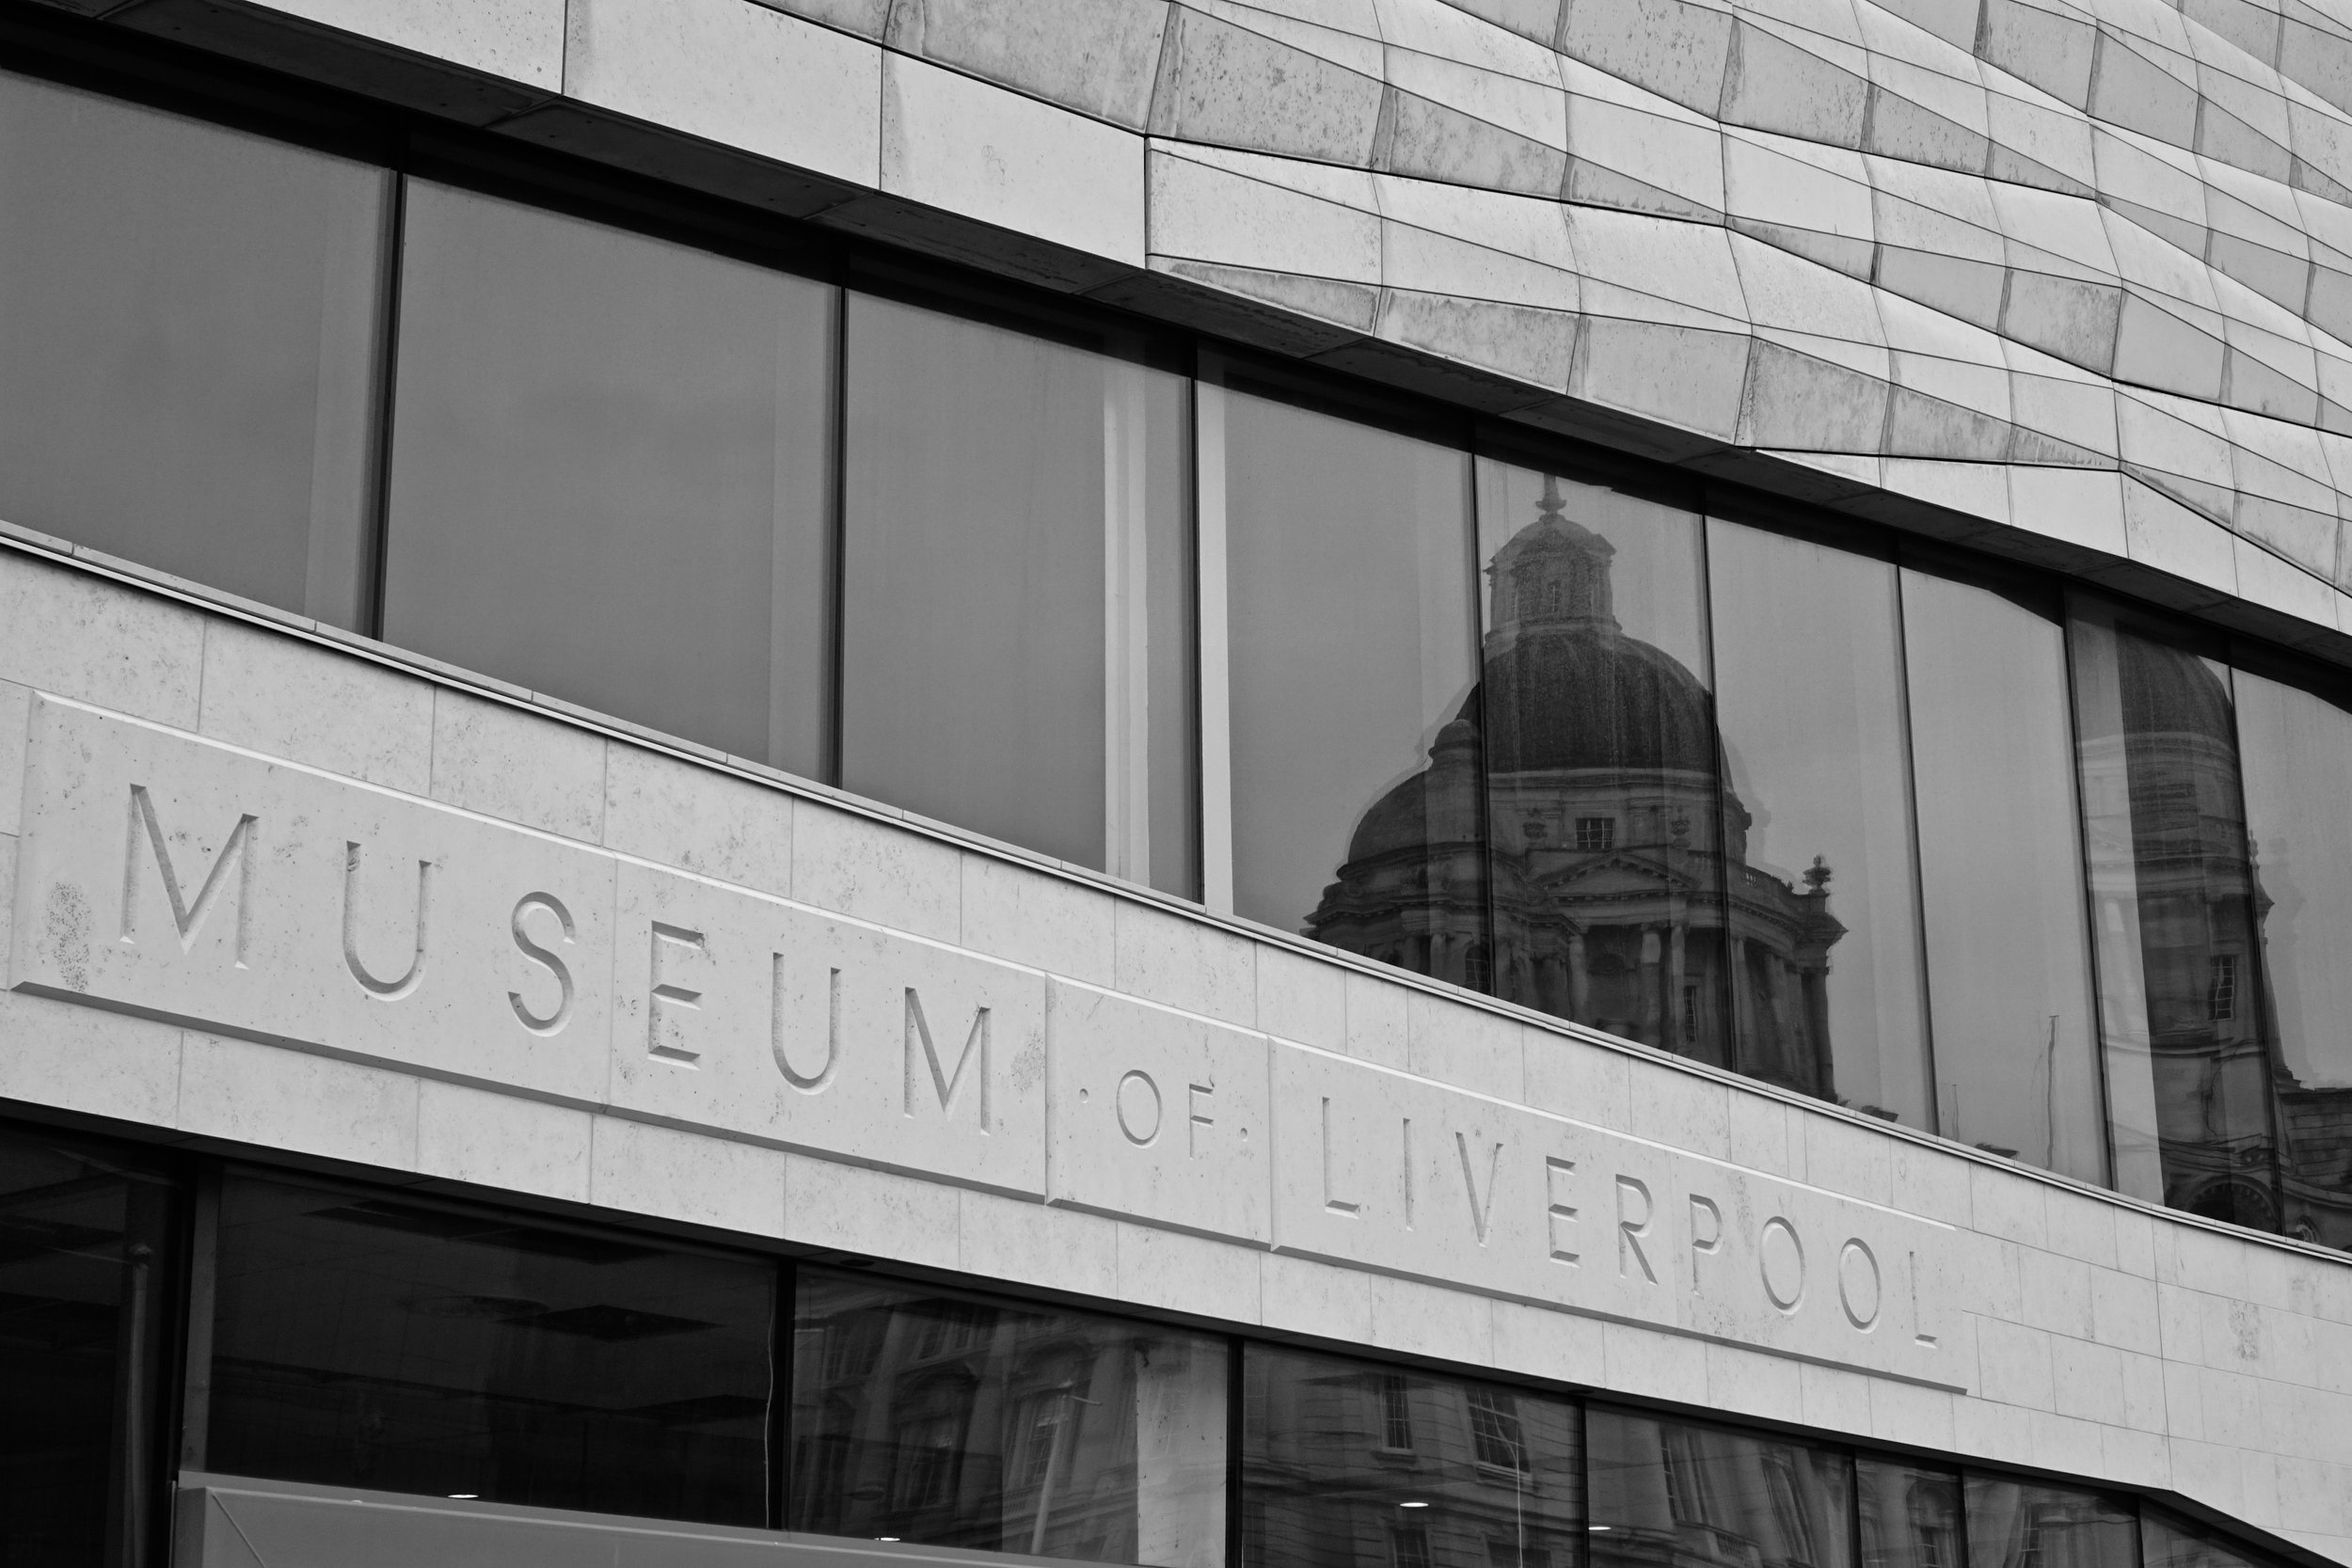 Museum of Liverpool